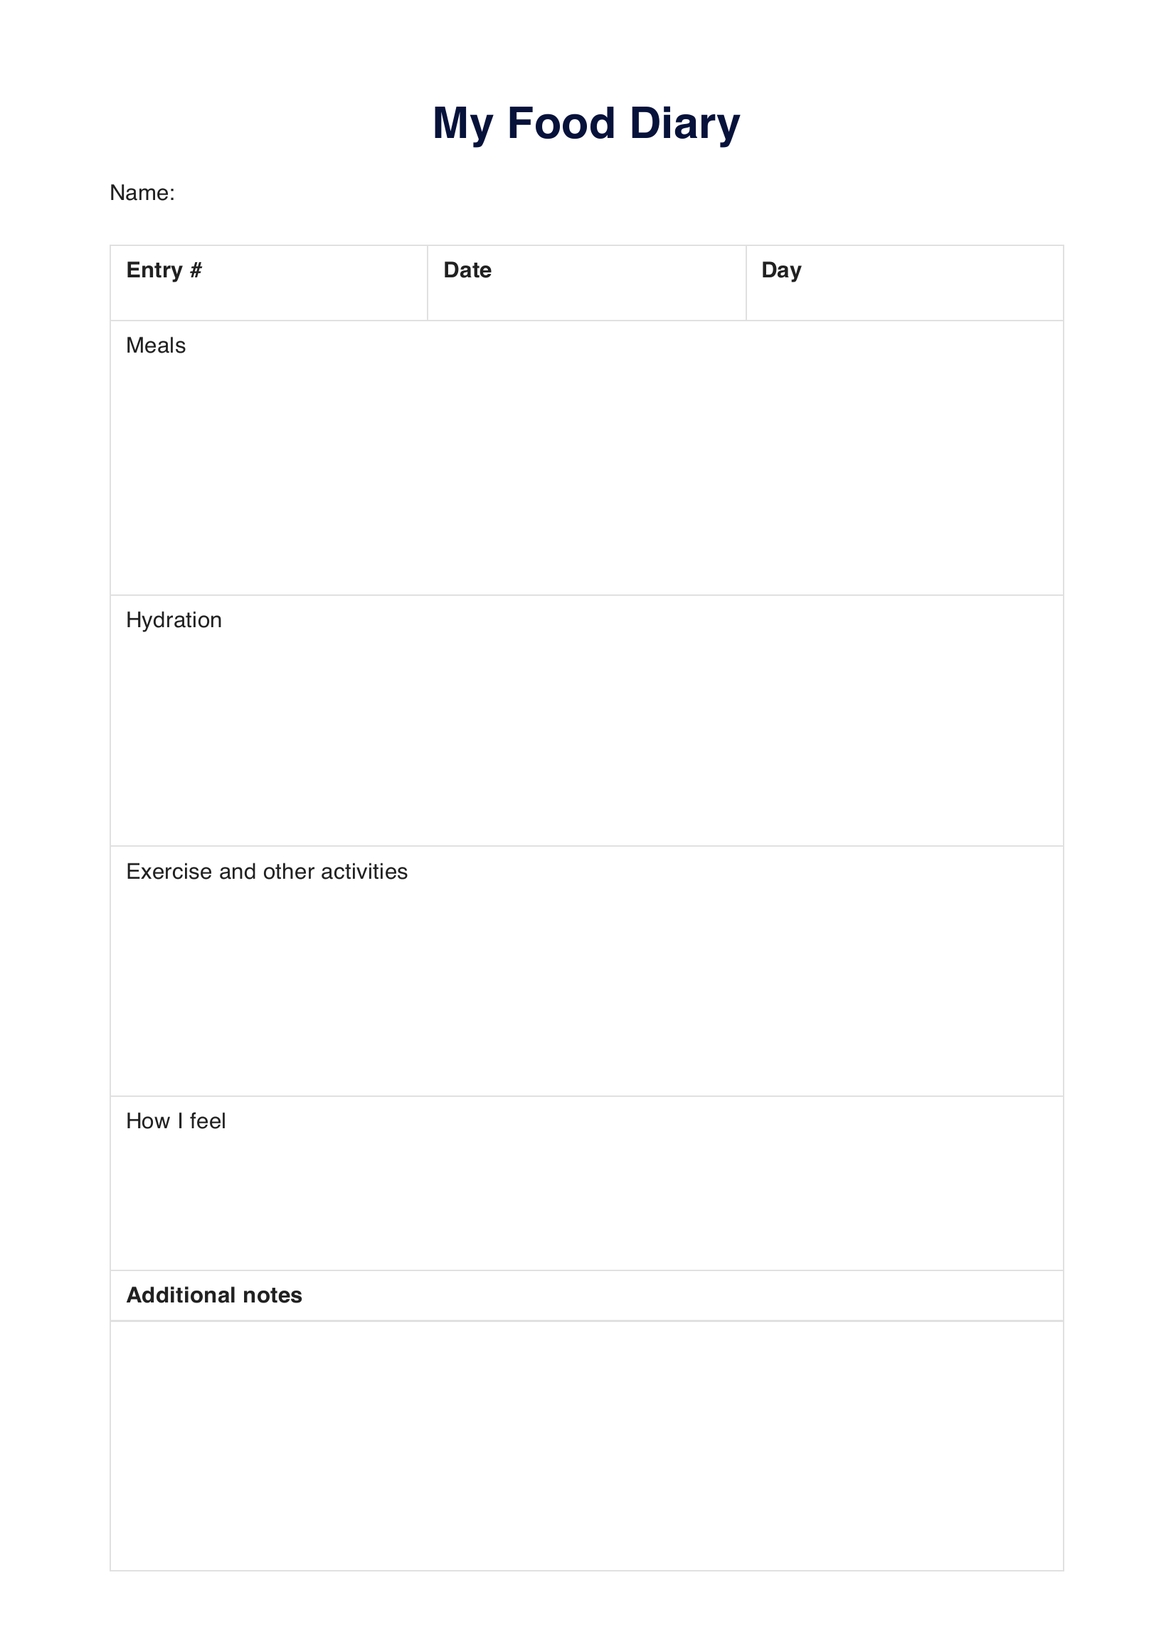 My Food Diary PDF Example